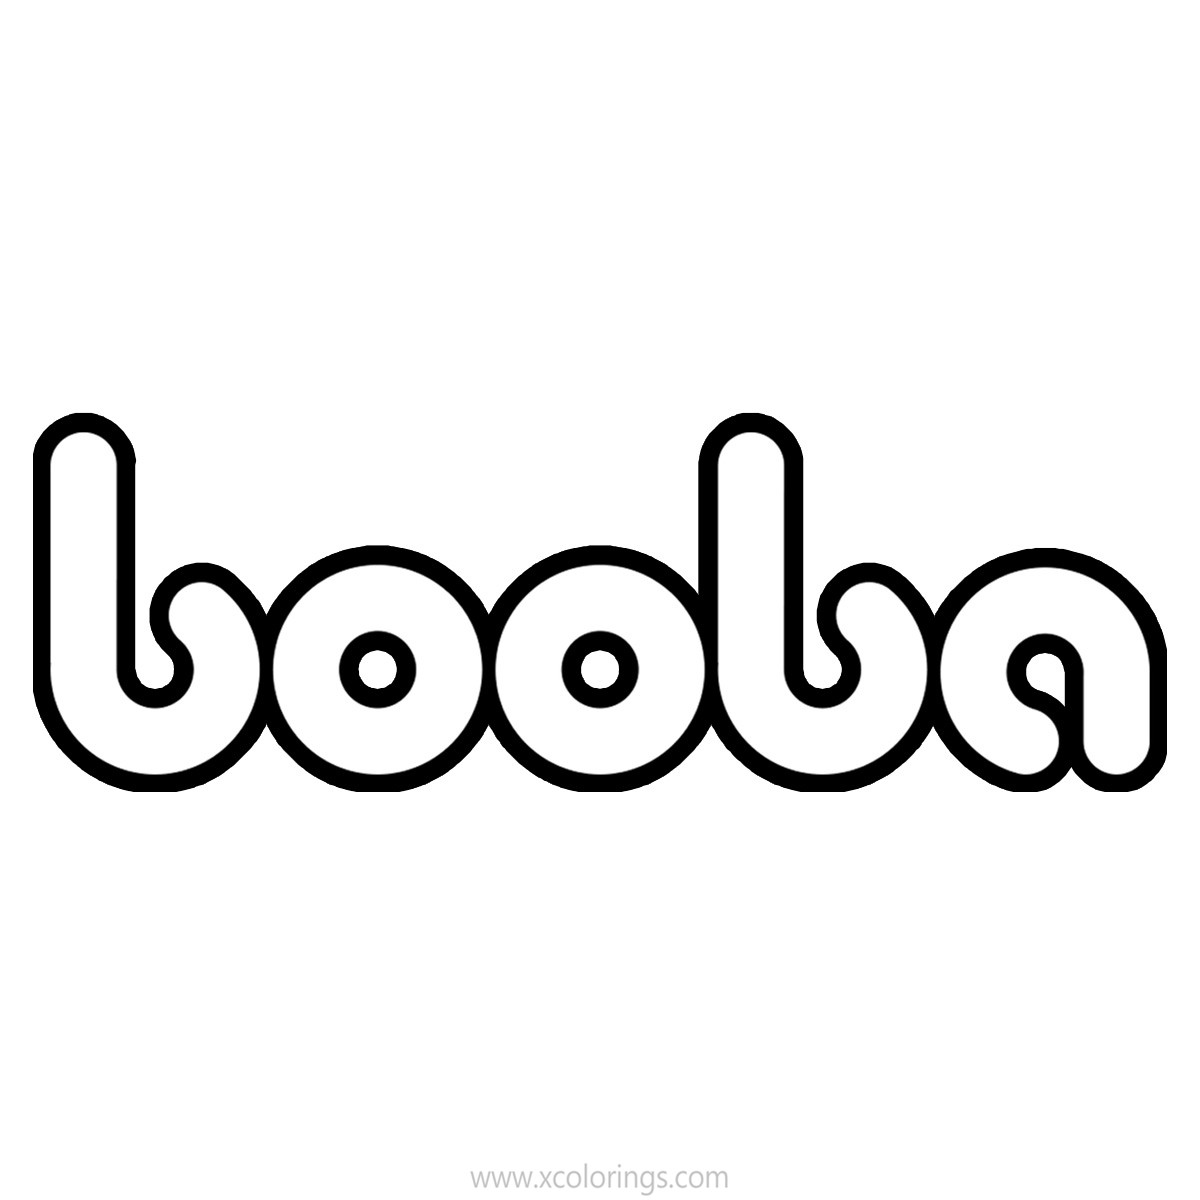 Free Booba Coloring Pages Logo printable